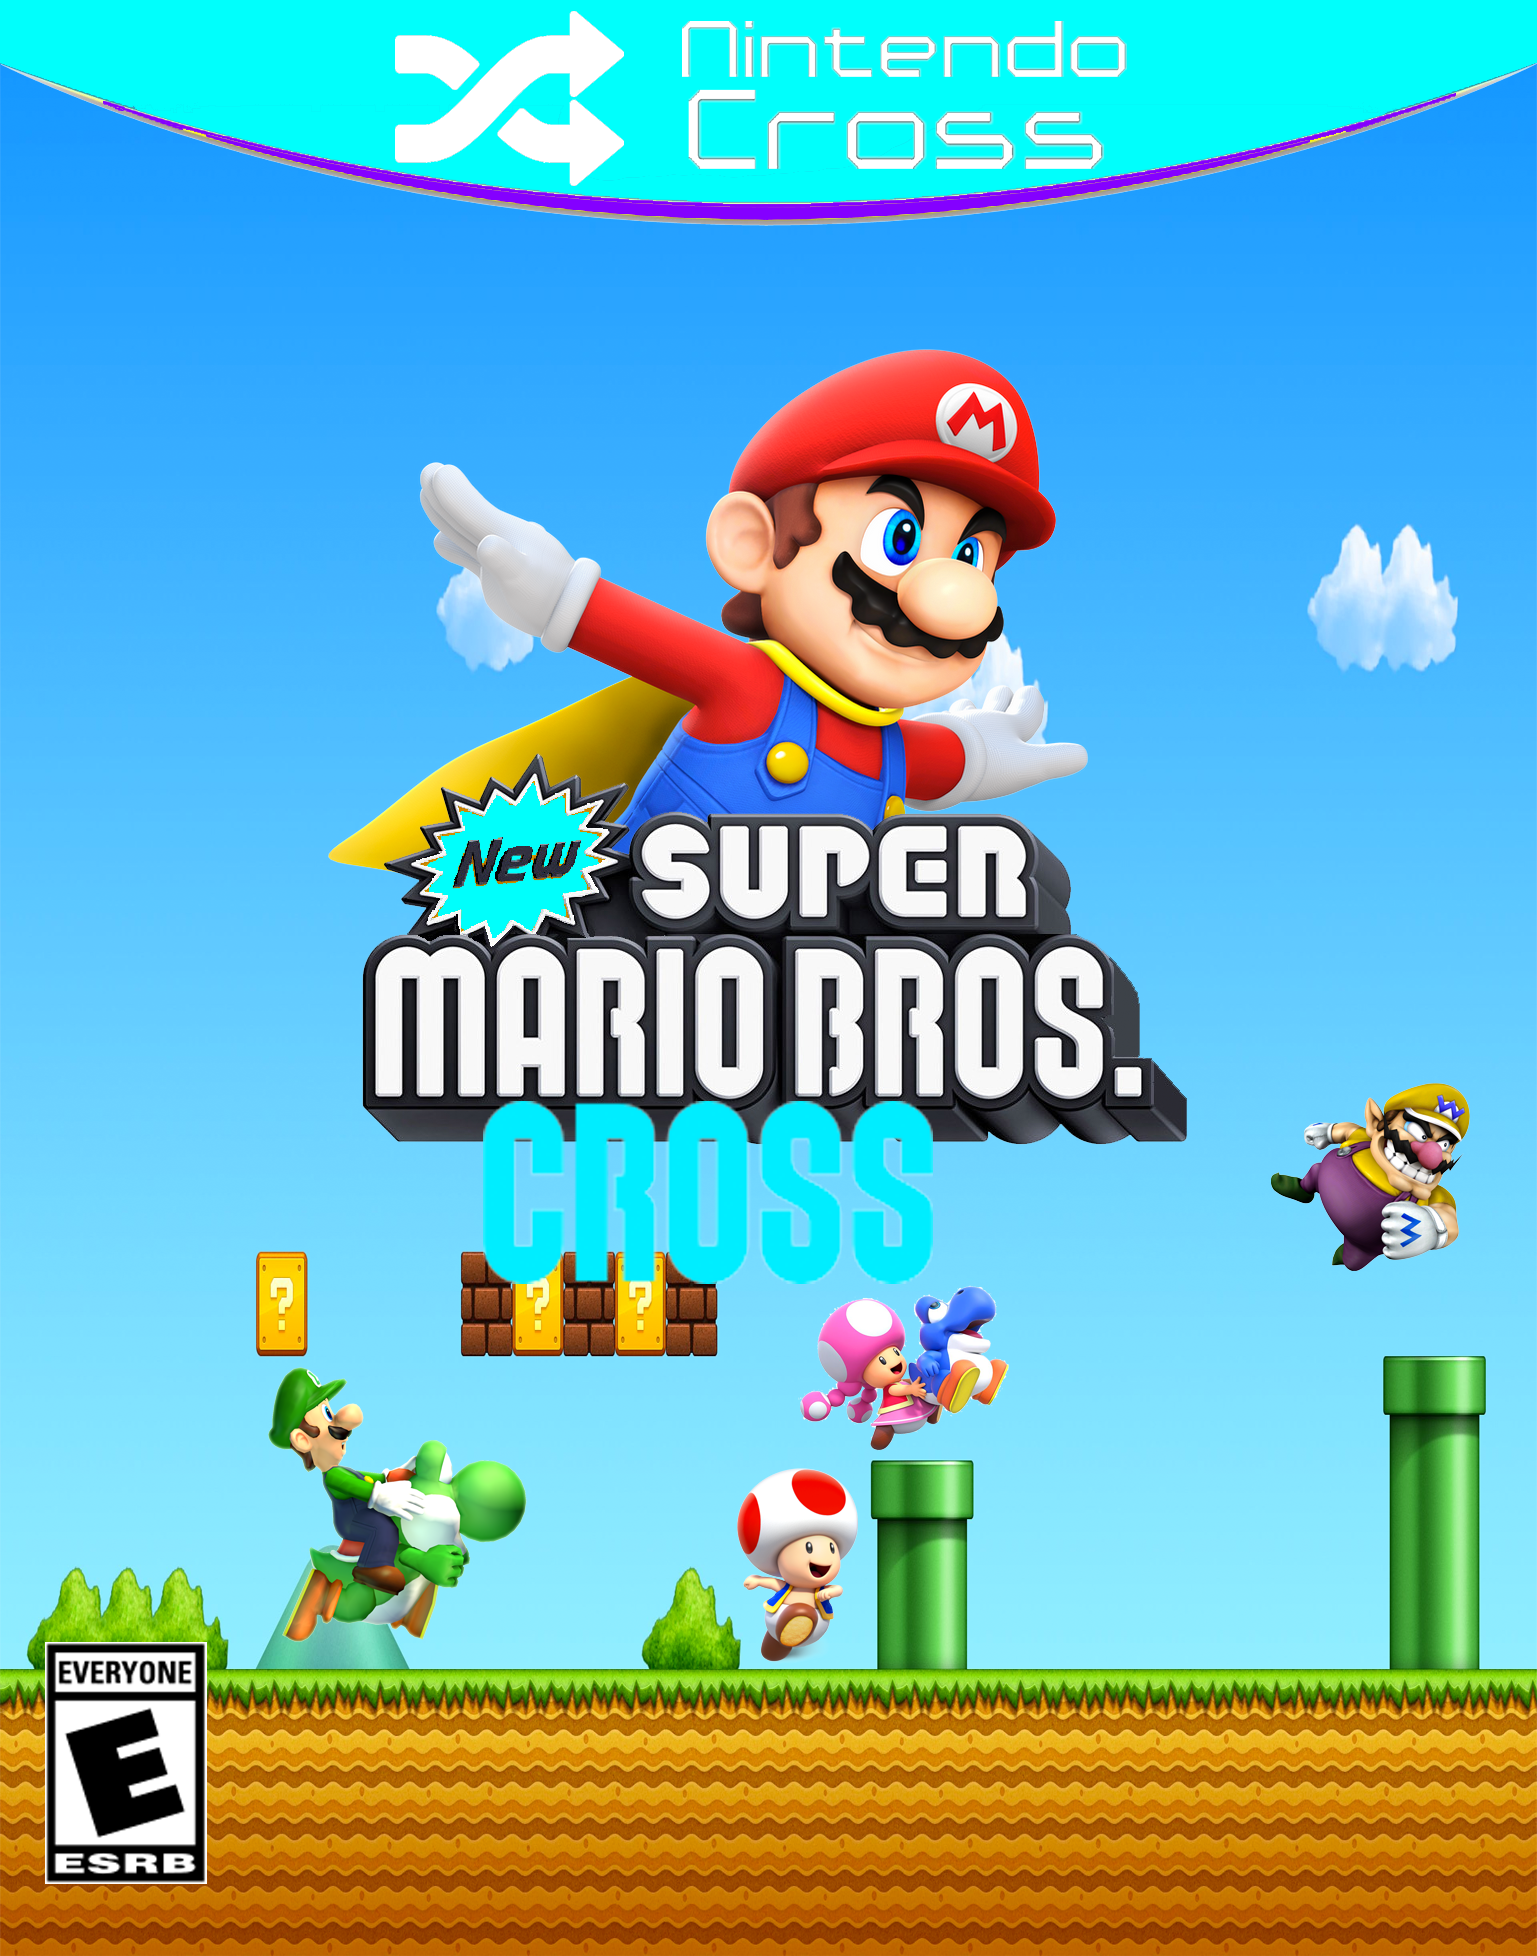 Exagerar mudo corriente New Super Mario Bros. Cross | Video Game Fanon Wiki | Fandom